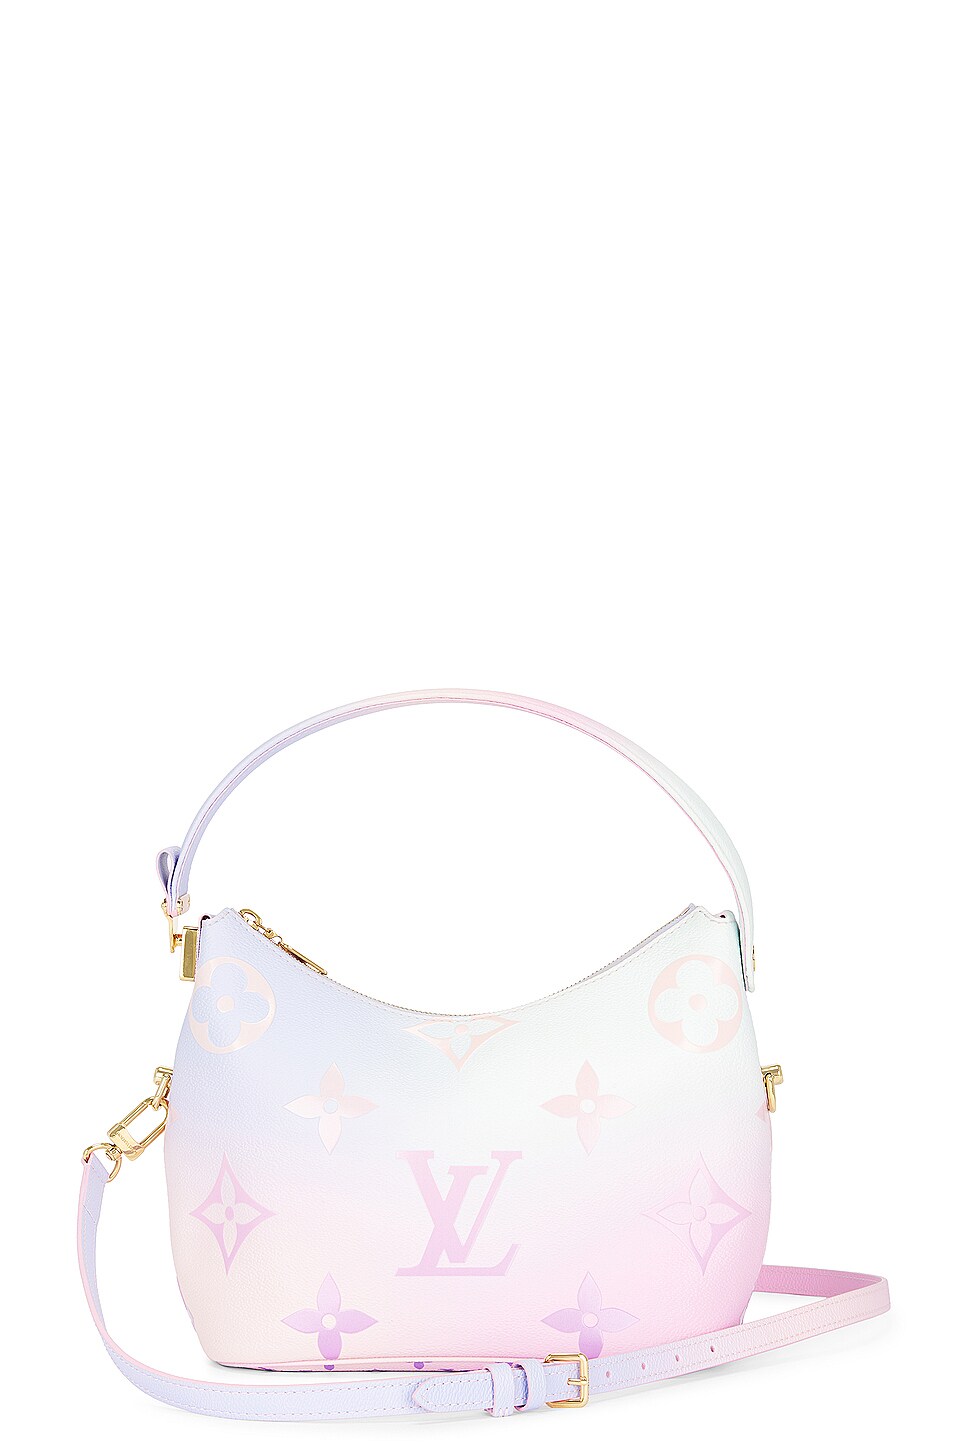 Monogram Marshmallow Handbag in Lavender